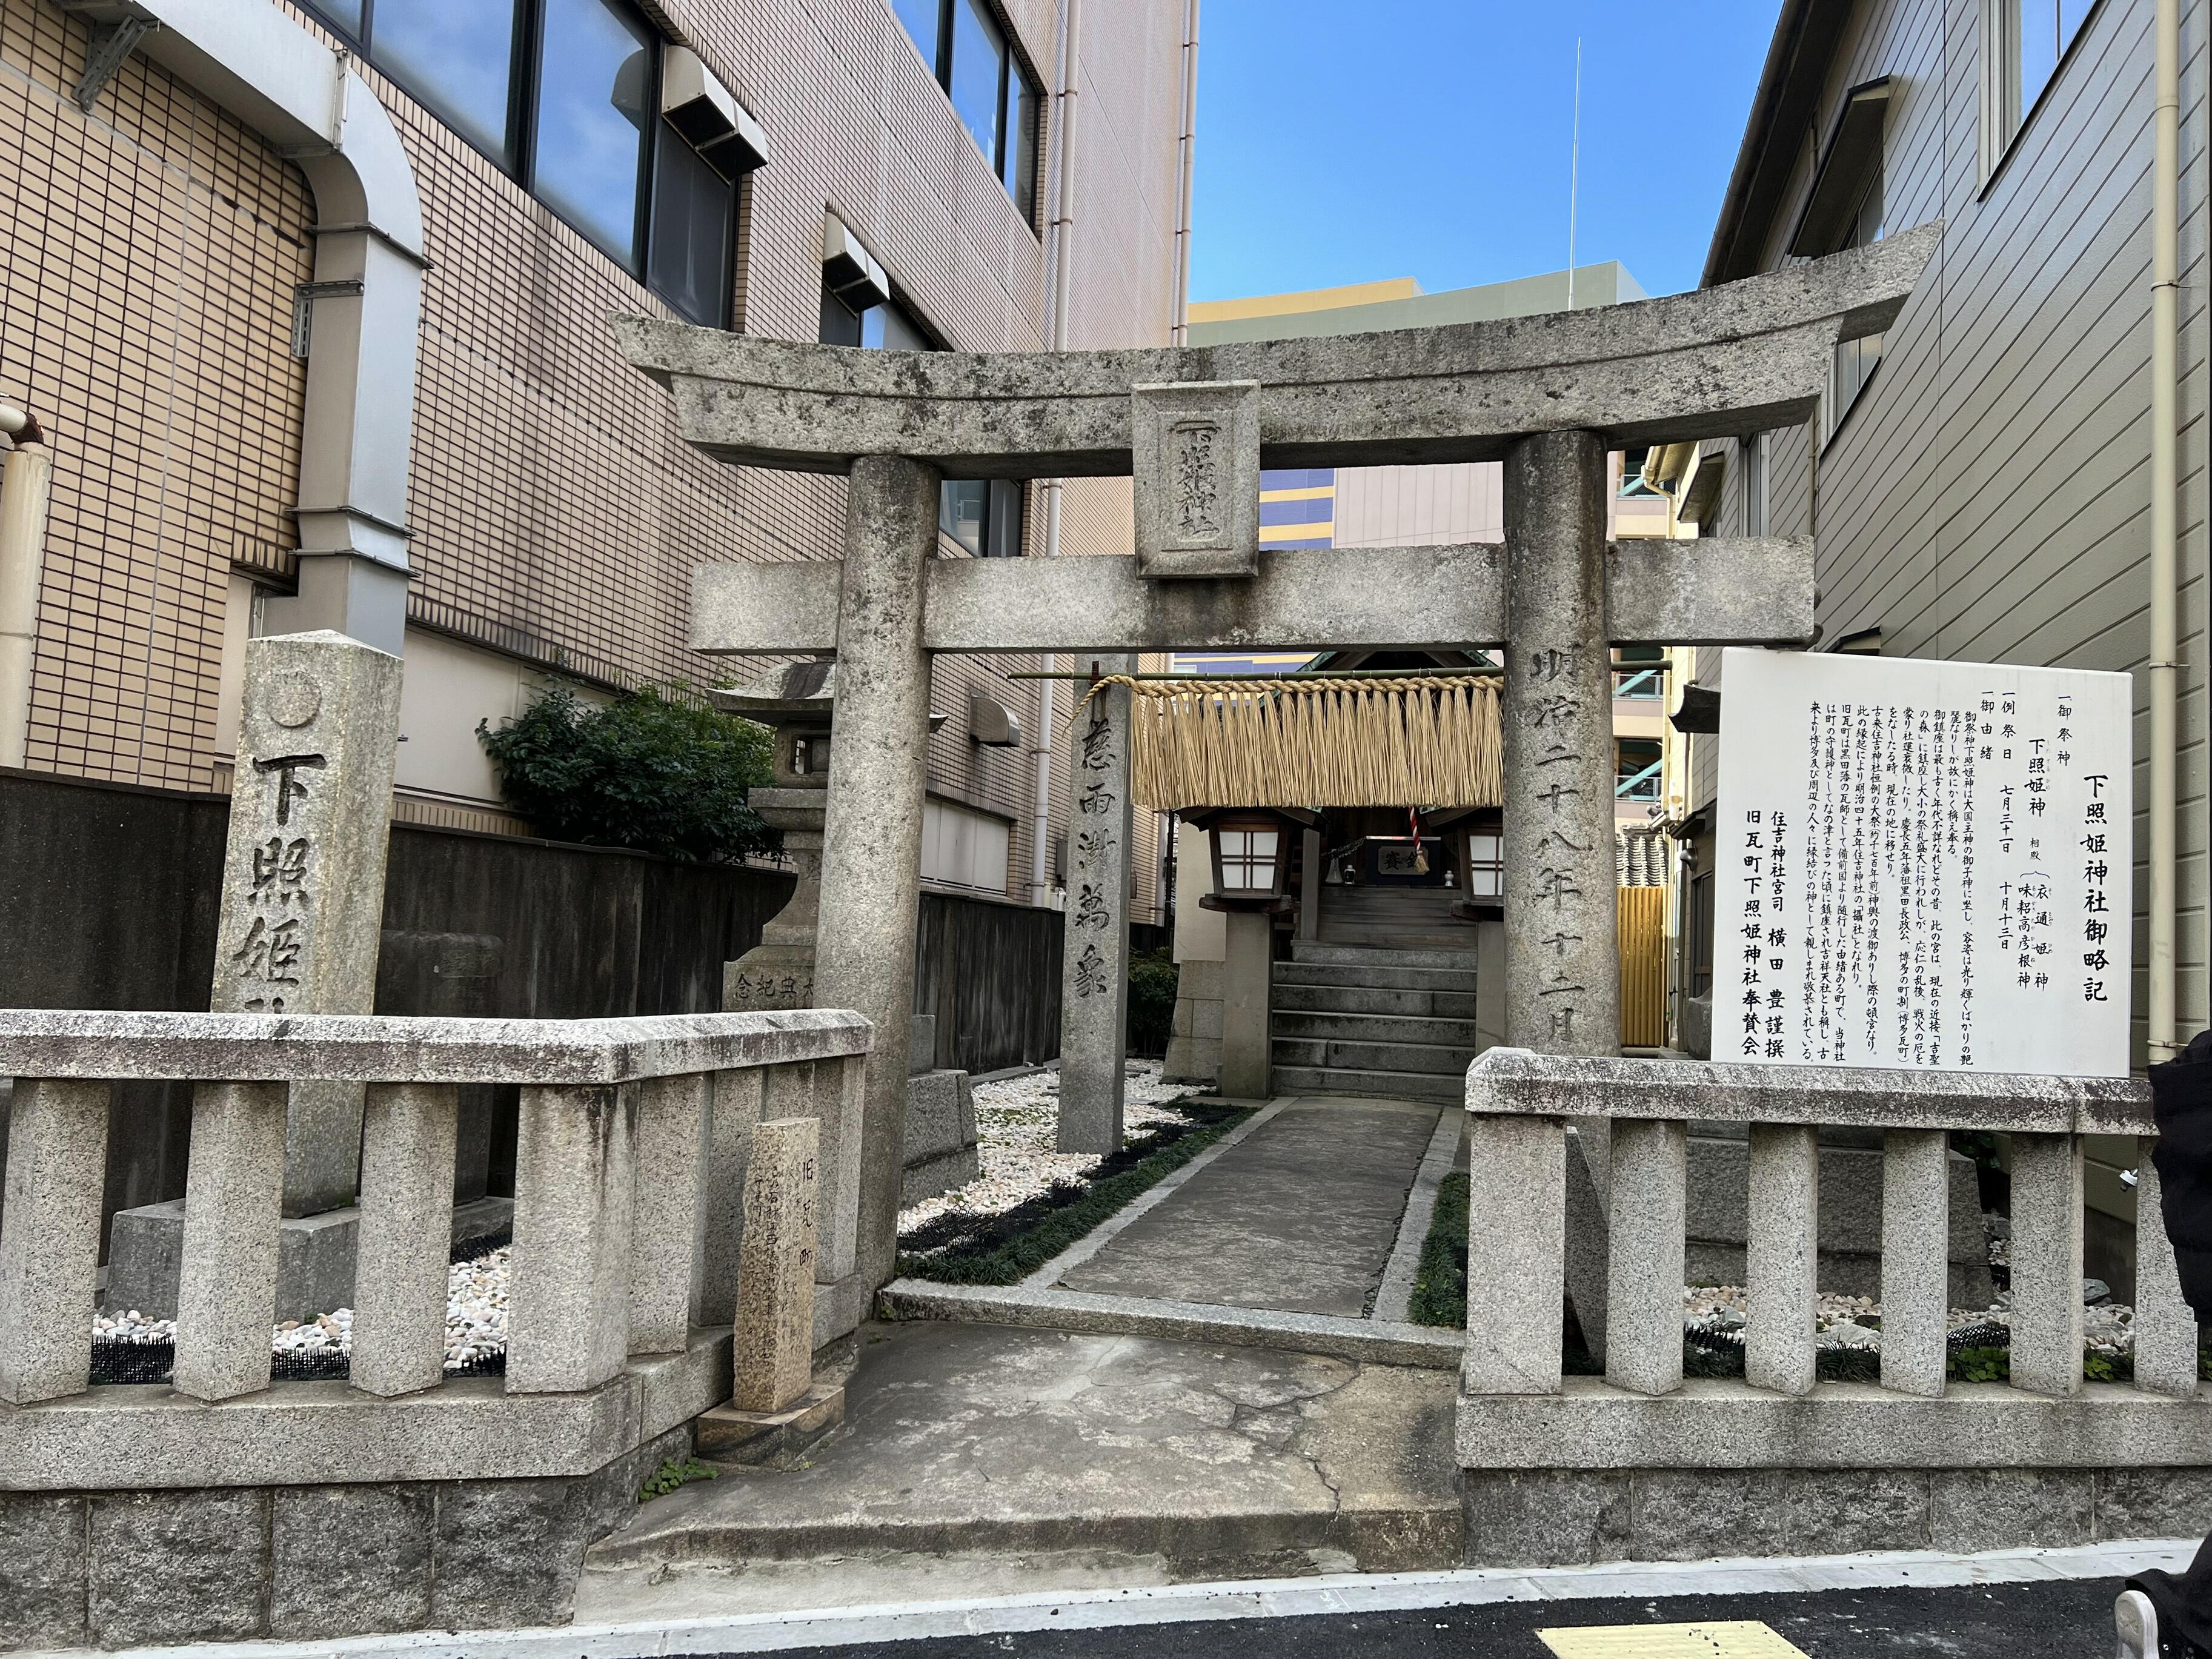 下照姫神社 - 福岡市博多区祇園町/神社 | Yahoo!マップ